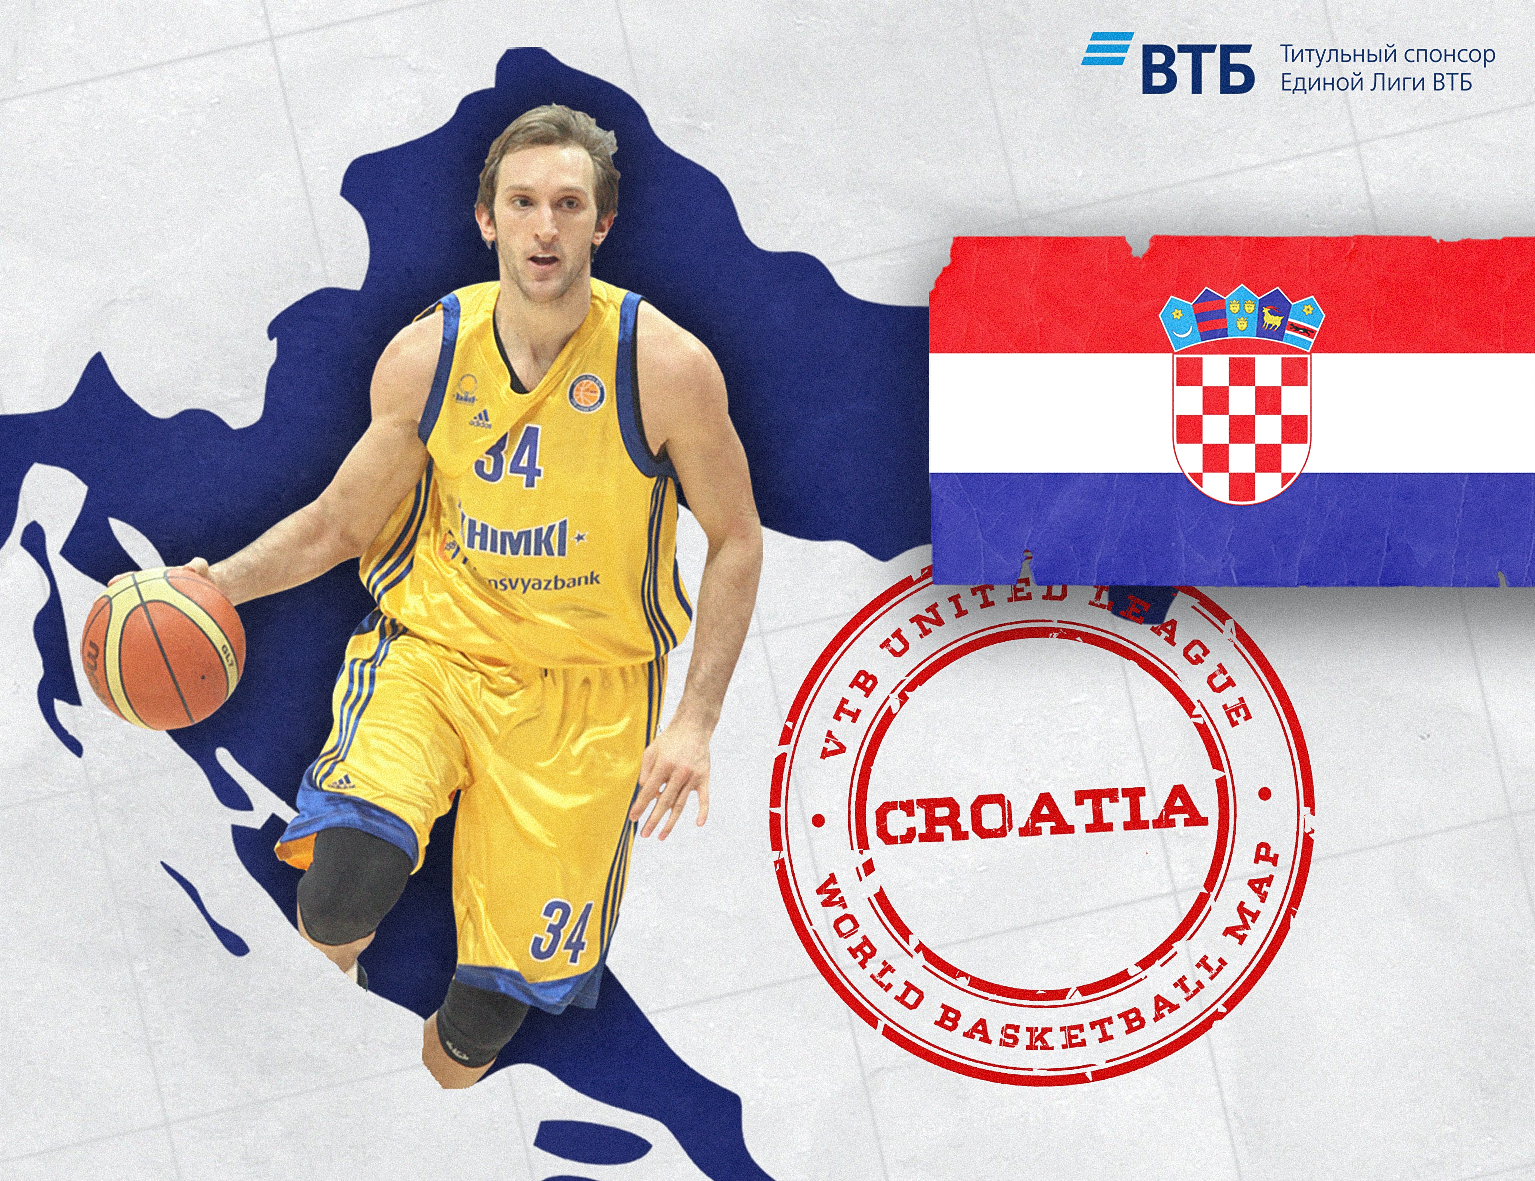 World basketball map: Croatia